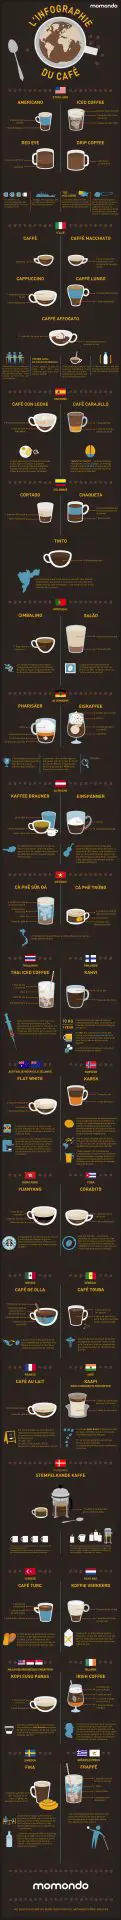 Infographie du café